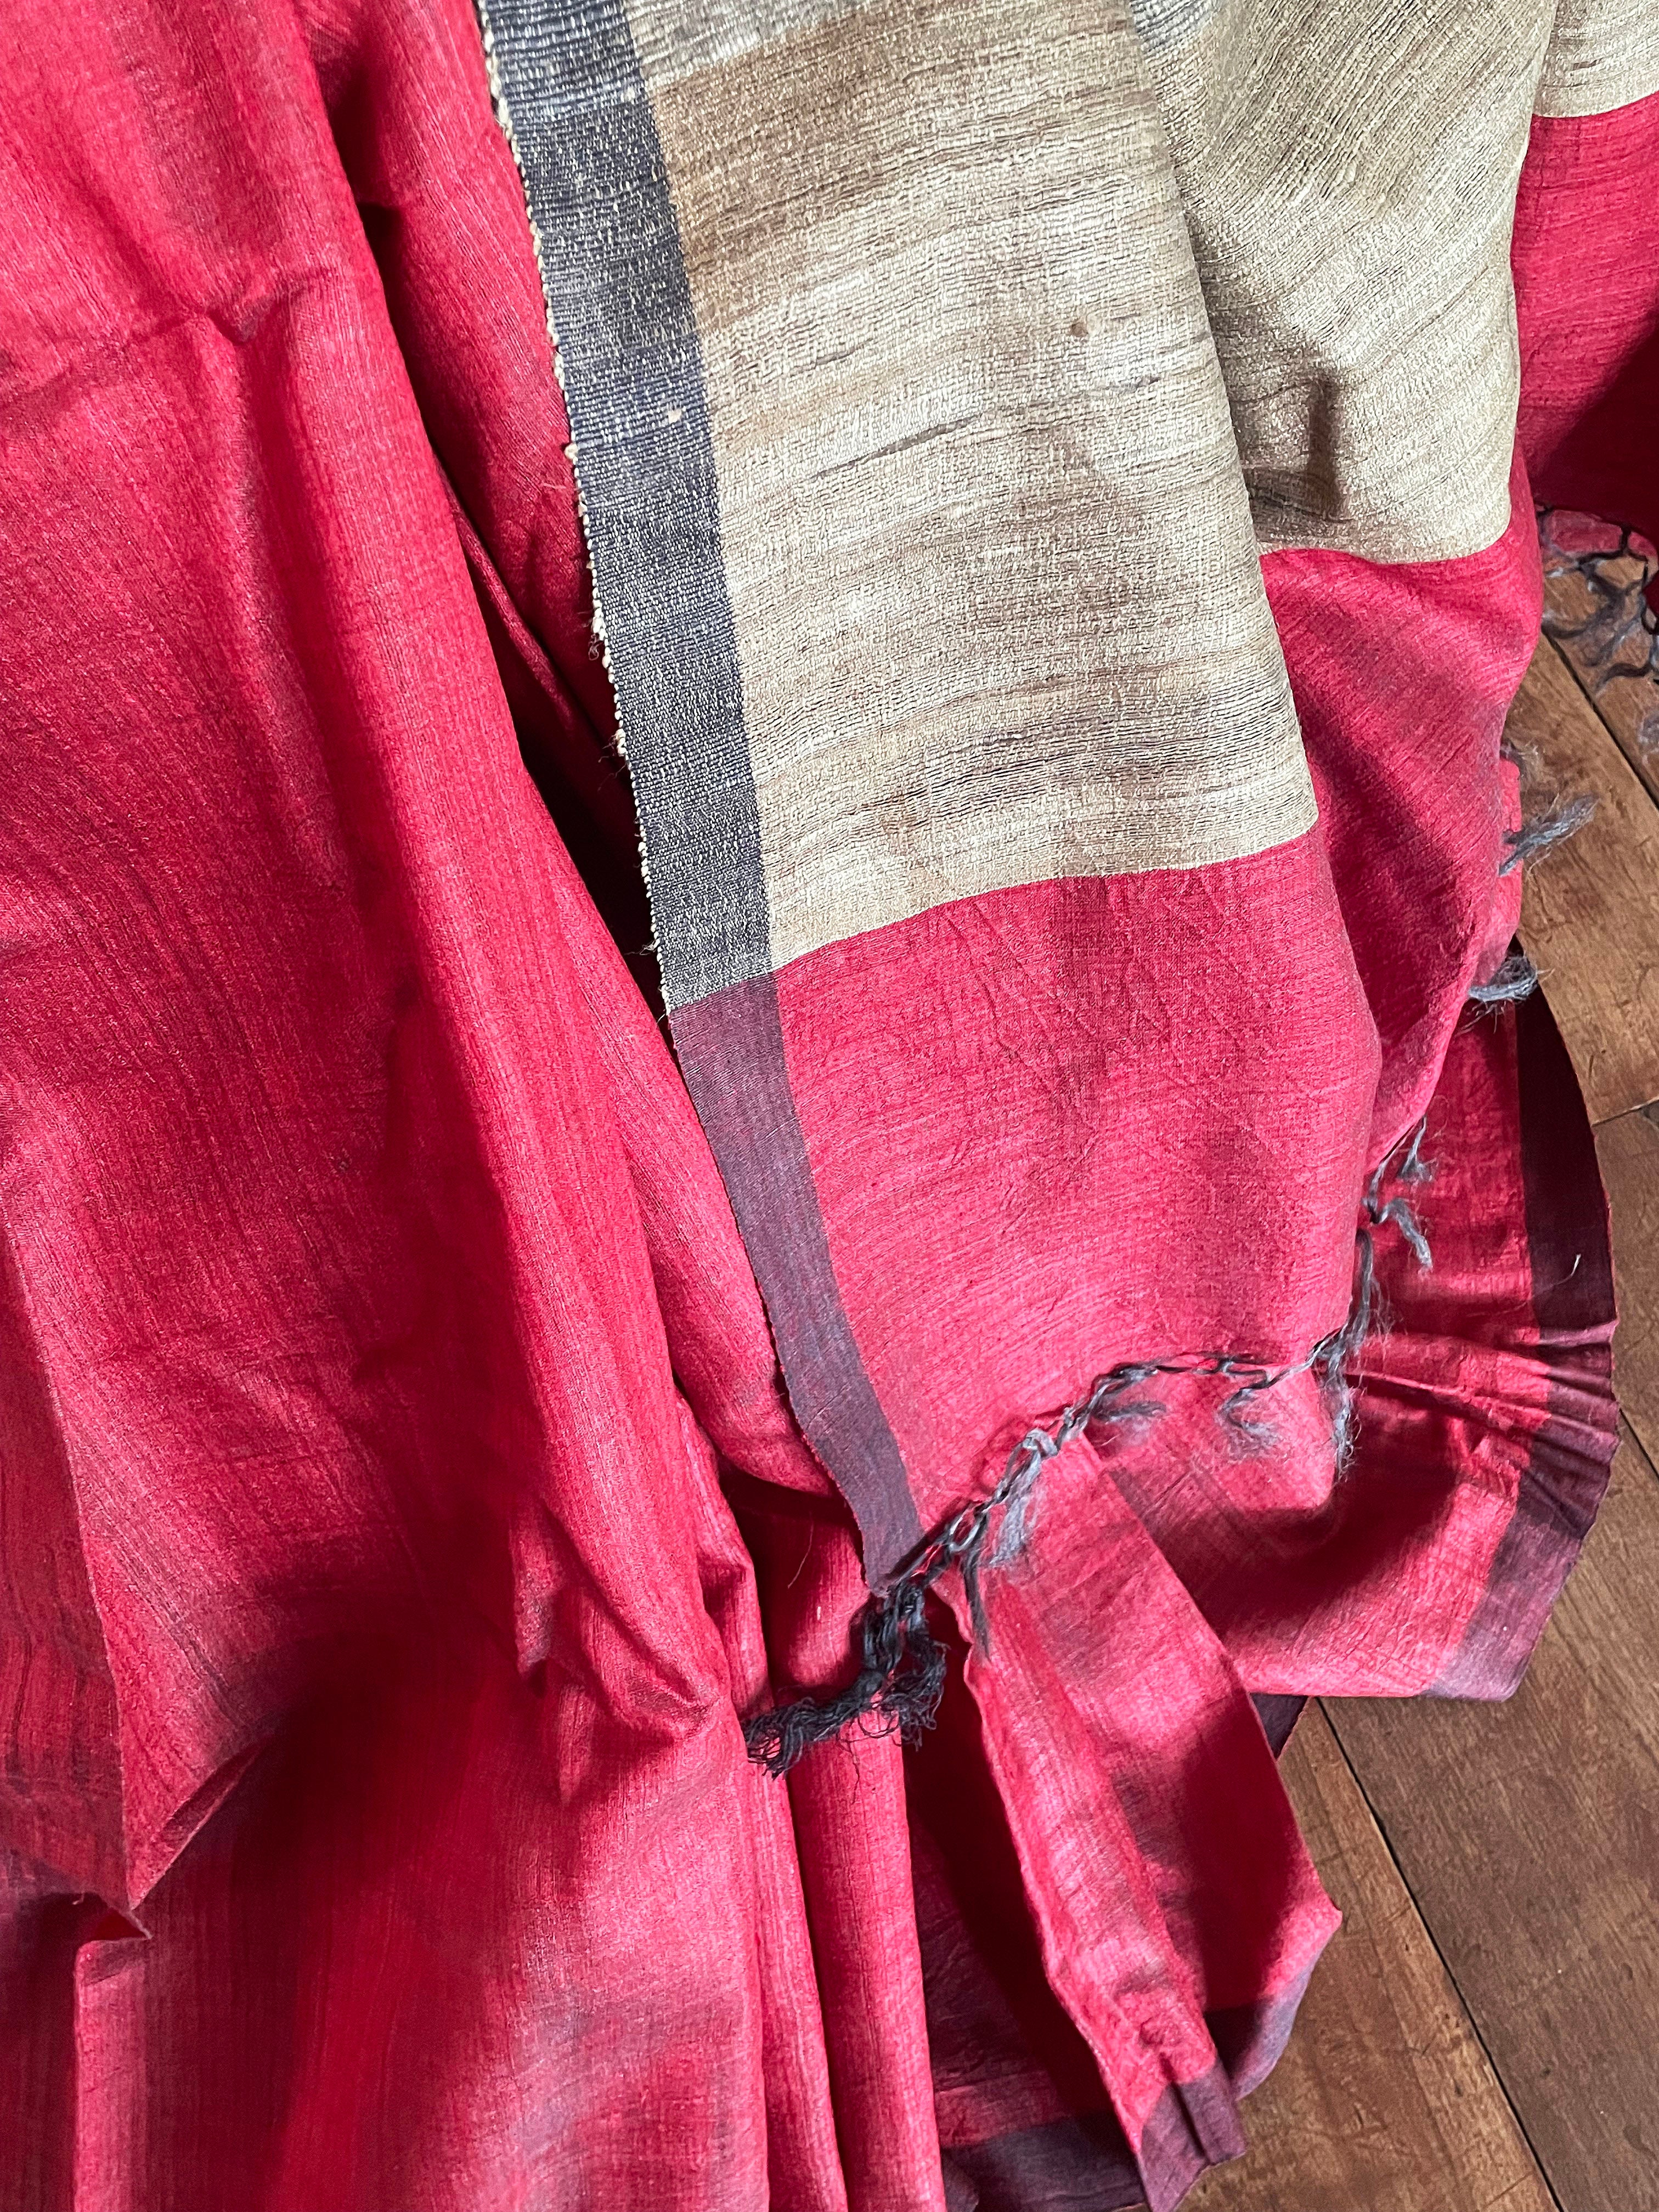 Matka silk saree from Bhagalpur